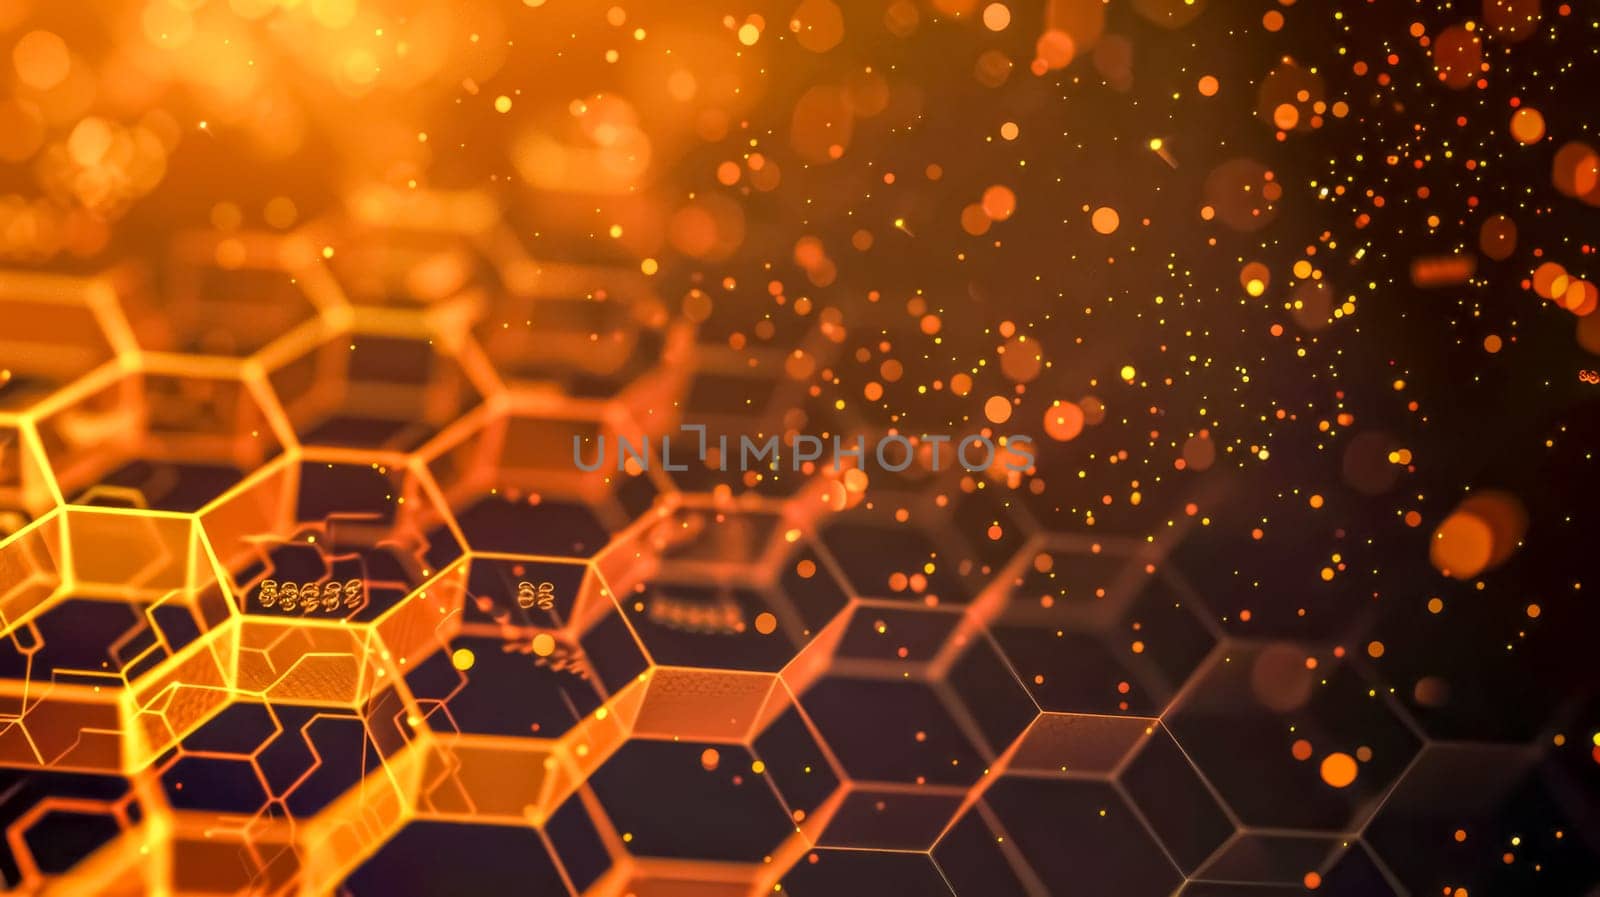 Abstract orange hexagonal network background by Edophoto